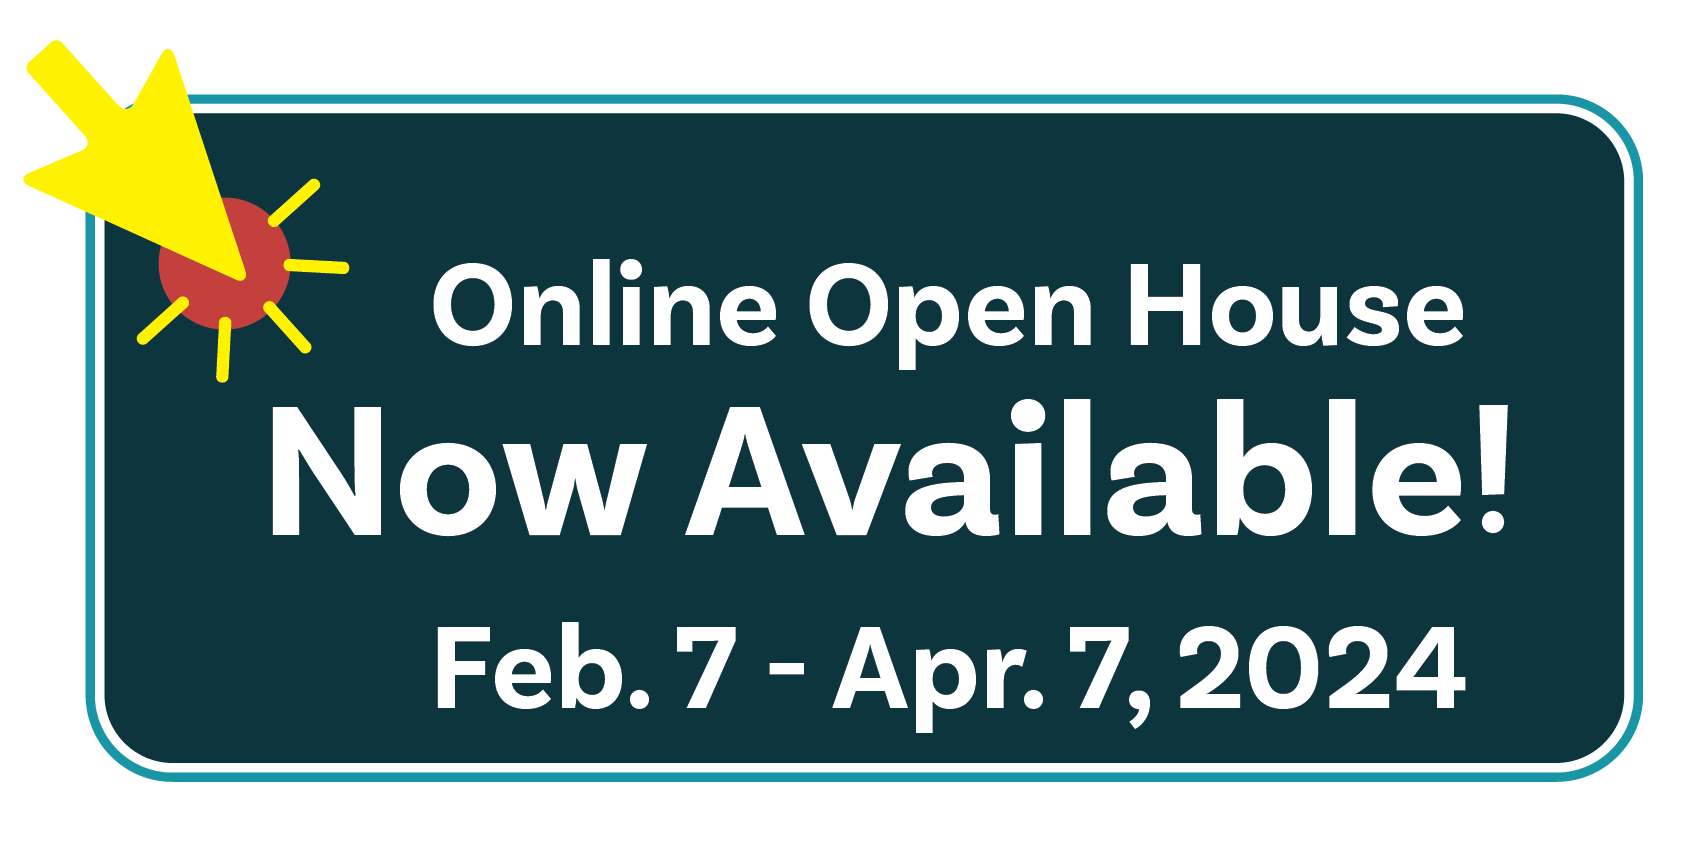 Online Open House